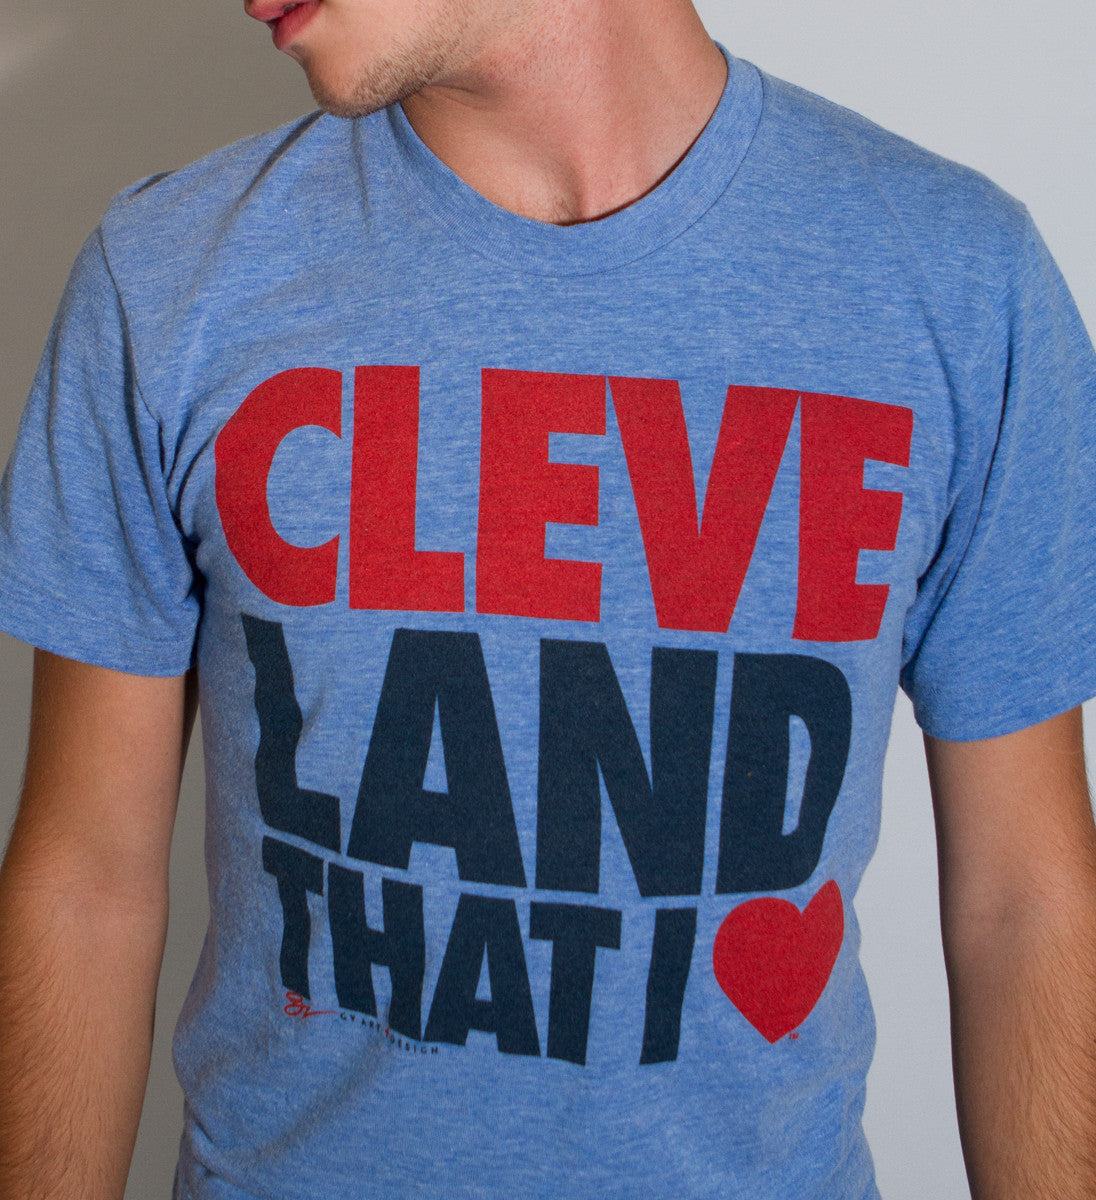 Cleveland That I Love T-shirt- Blue Cleveland Tee